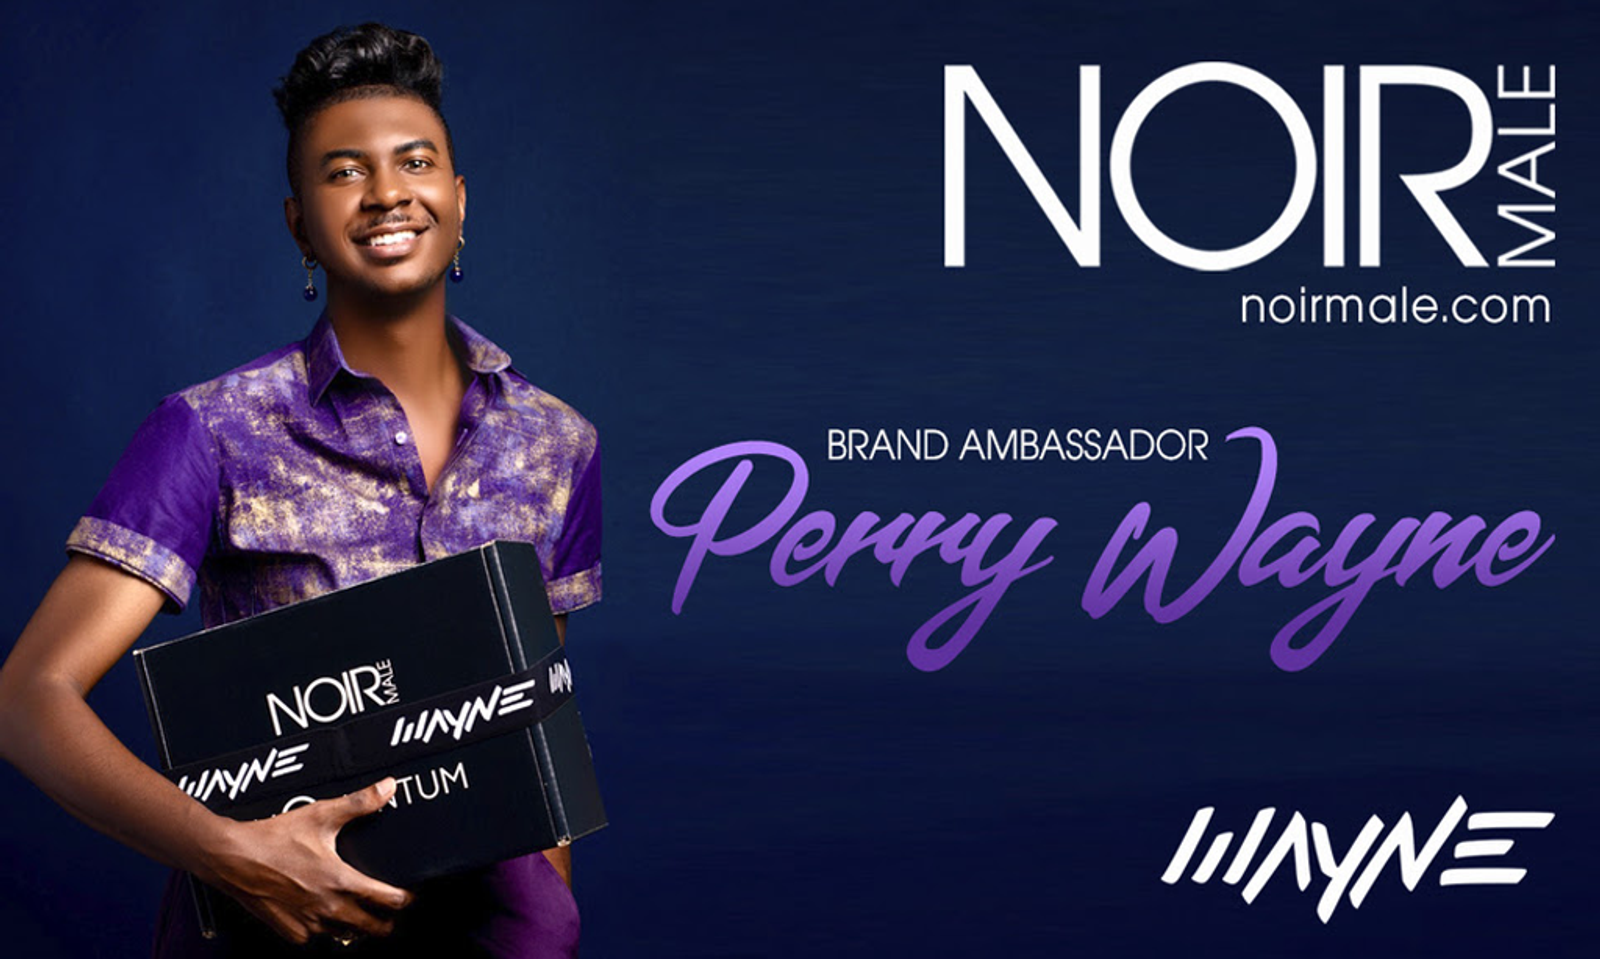 Fashion Designer Perry Wayne Named Noir Male Brand Ambassador